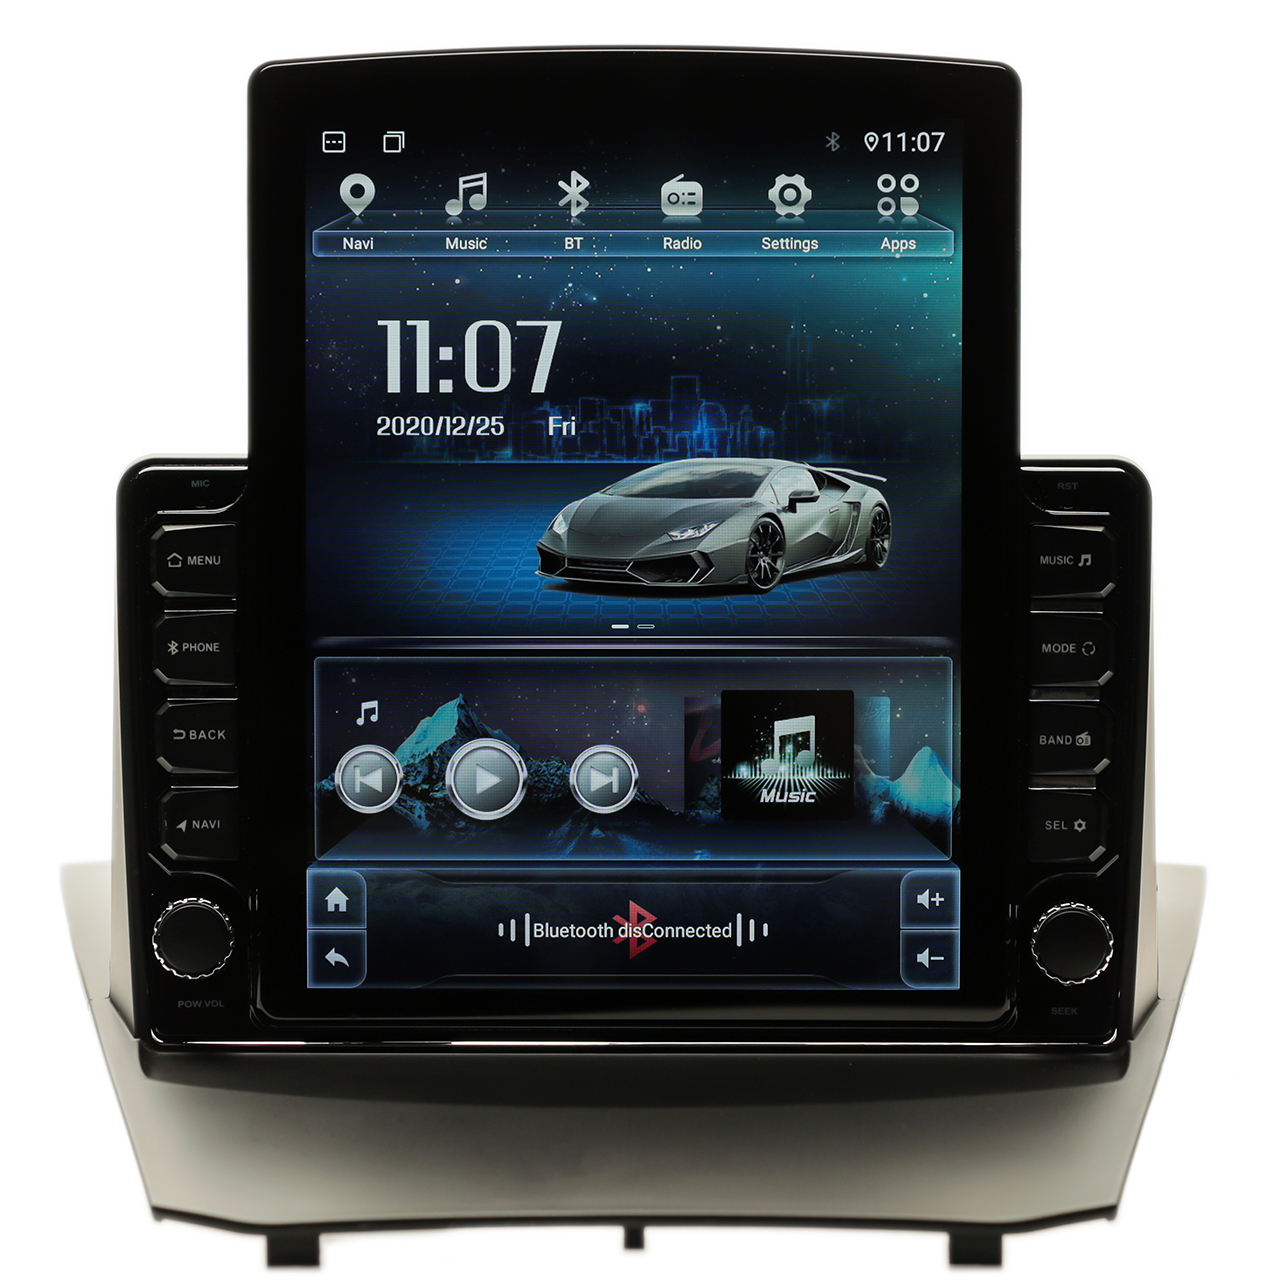 Navigatie AUTONAV ECO Android GPS Dedicata Ford Fiesta 2009-2016, Model XPERT Memorie 16GB Stocare, 1GB DDR3 RAM, Butoane Si Volum Fizice, Display Vertical Stil Tesla 10" Full-Touch, WiFi, 2 x USB, Bluetooth, Quad-Core 4 * 1.3GHz, 4 * 50W Audio